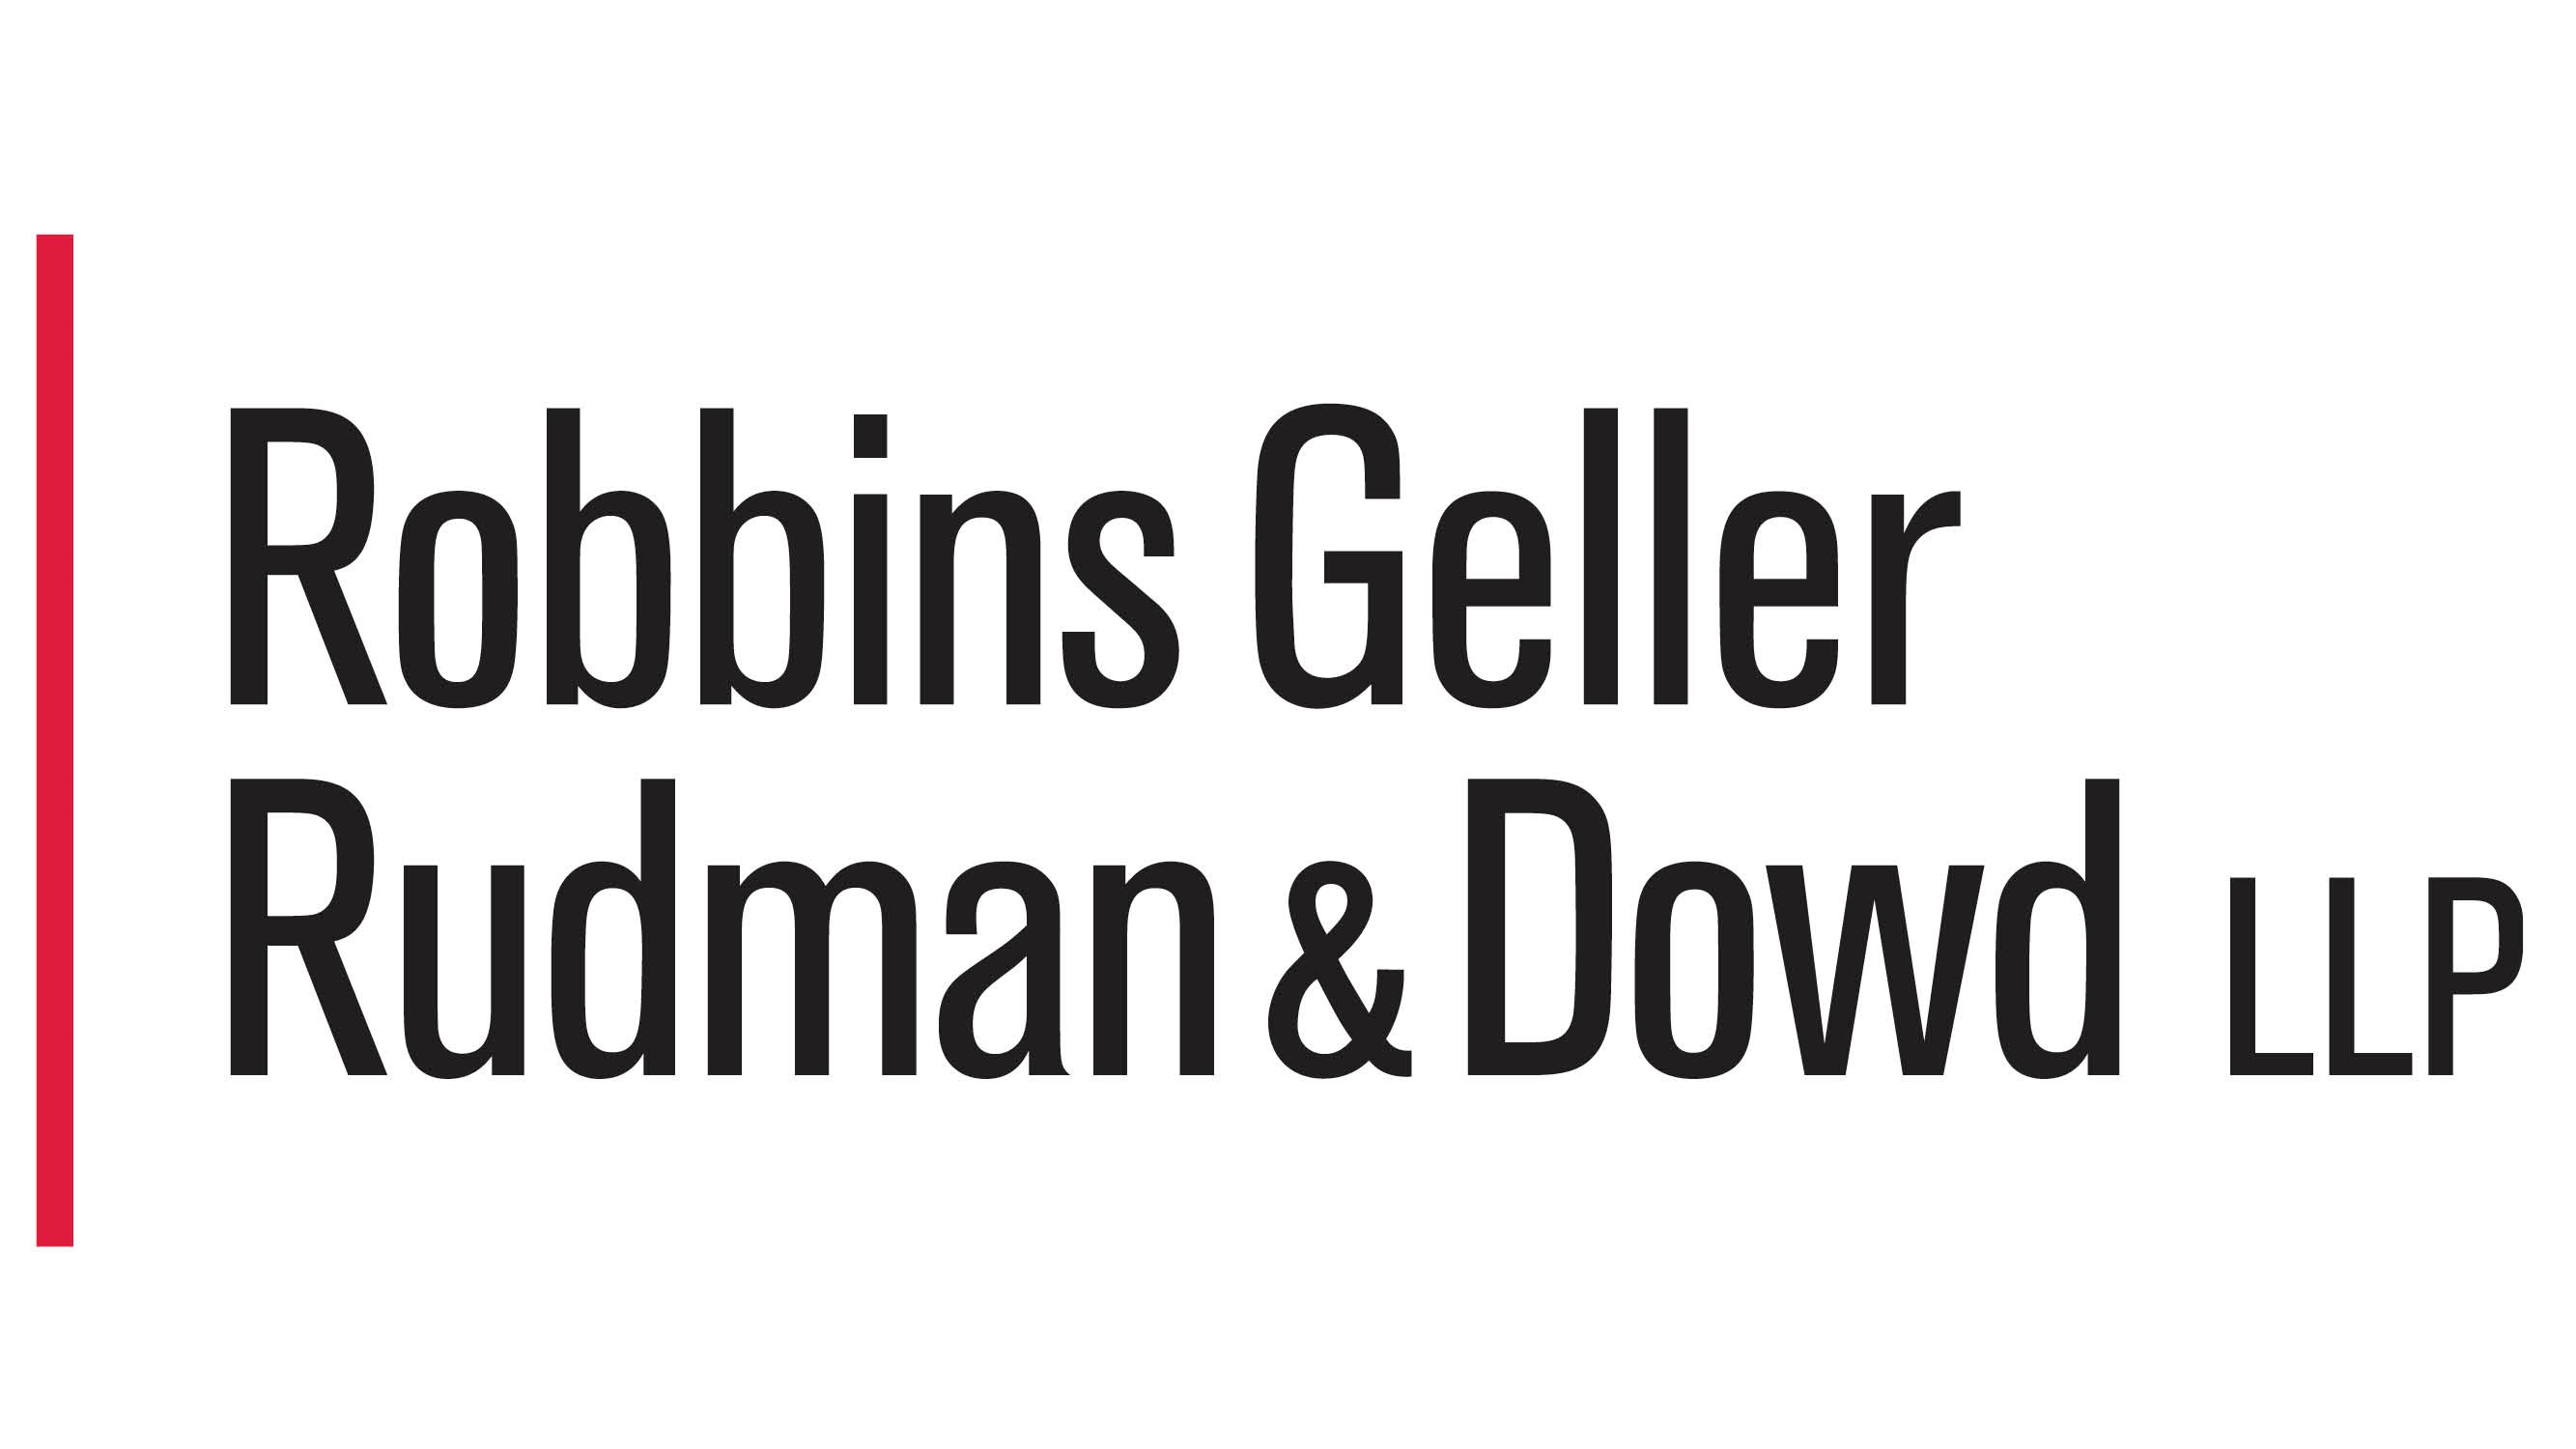 Robbins Geller Rudman & Dowd LLP, Wednesday, October 20, 2021, Press release picture